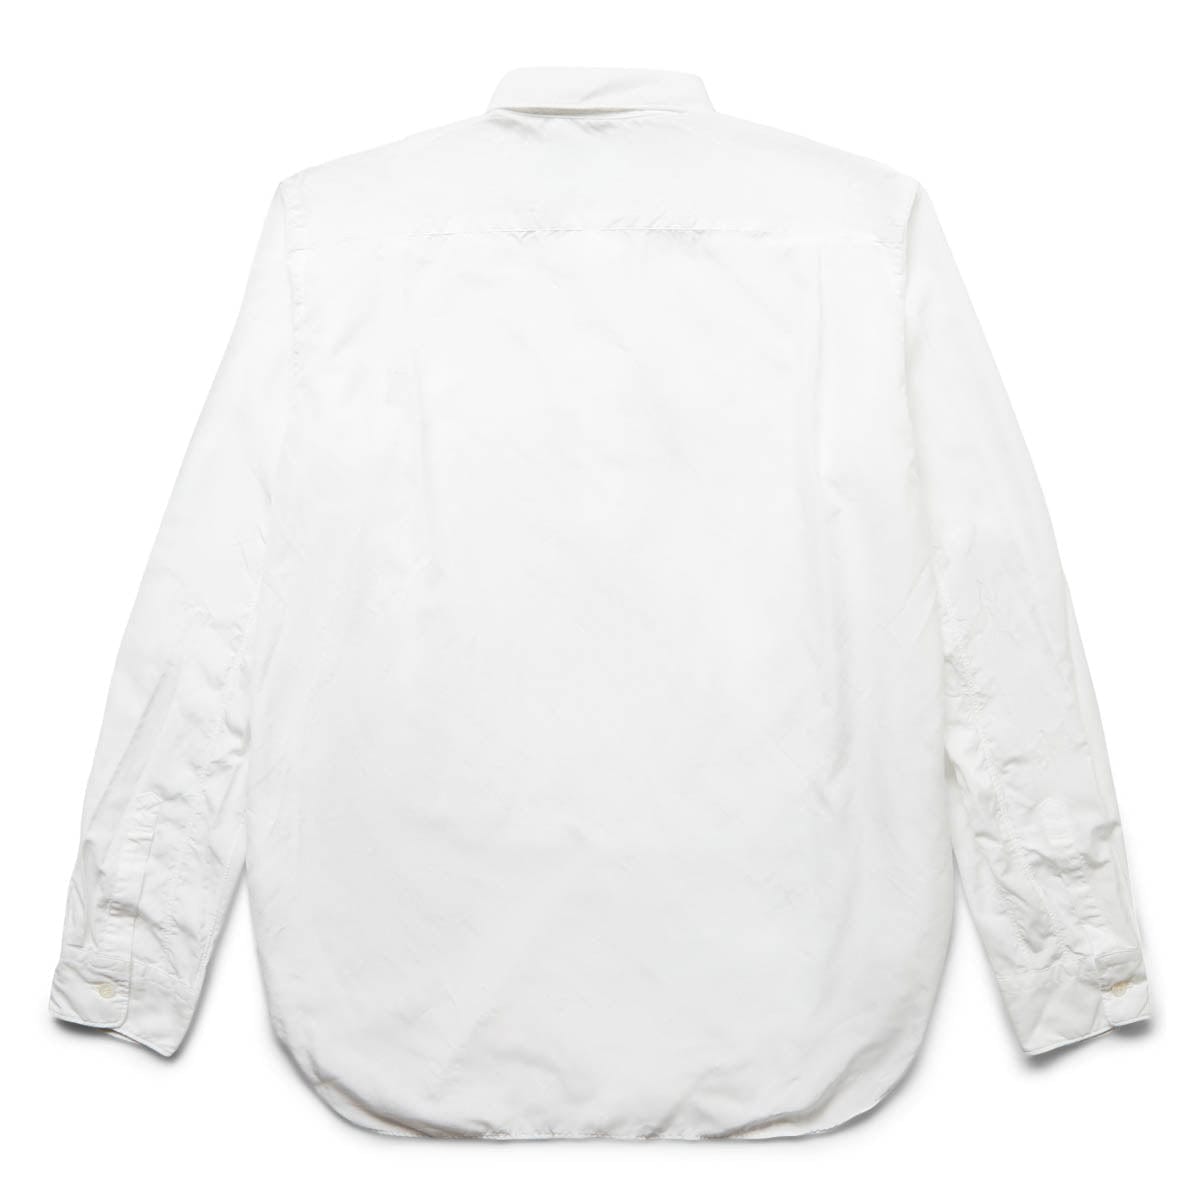 Sofolk Wings Print Sweatshirt, SHIRT WHITE